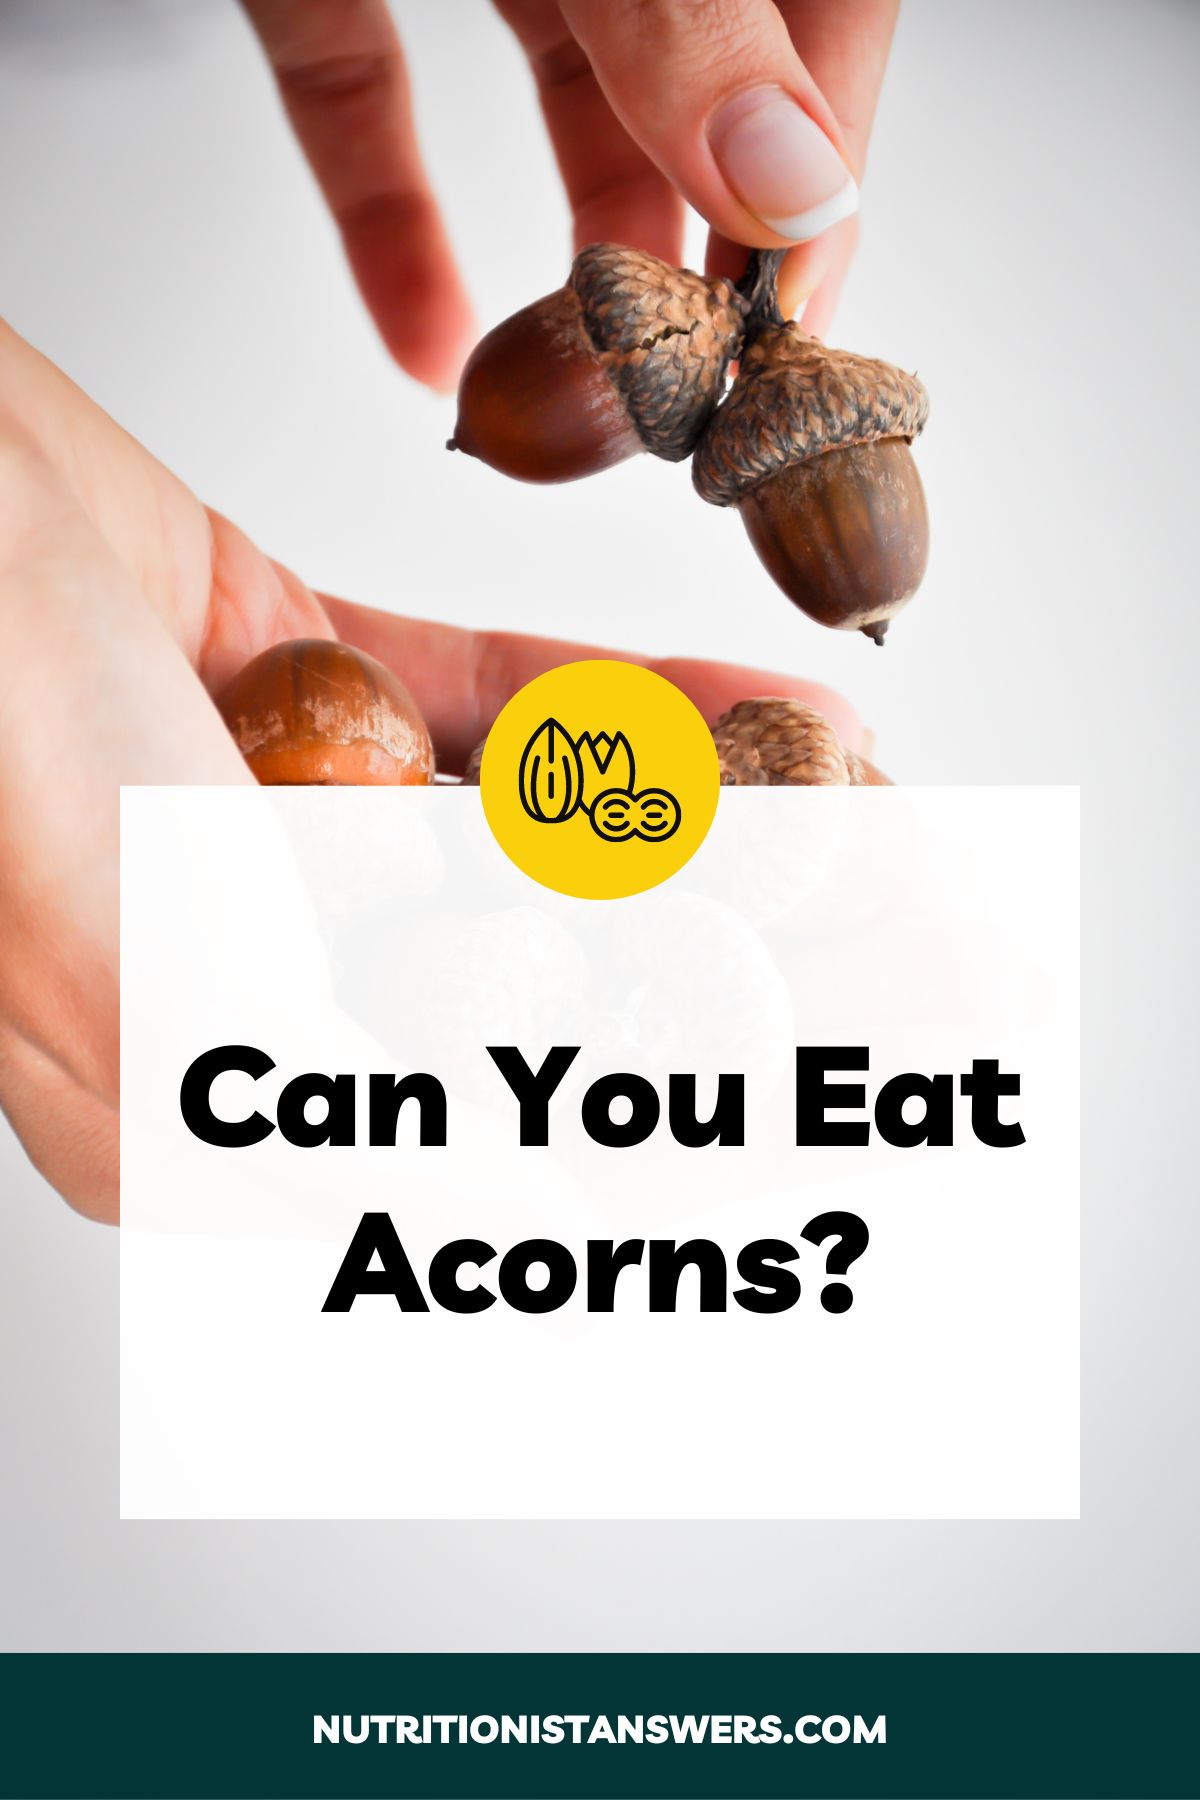 Can You Eat Acorns?